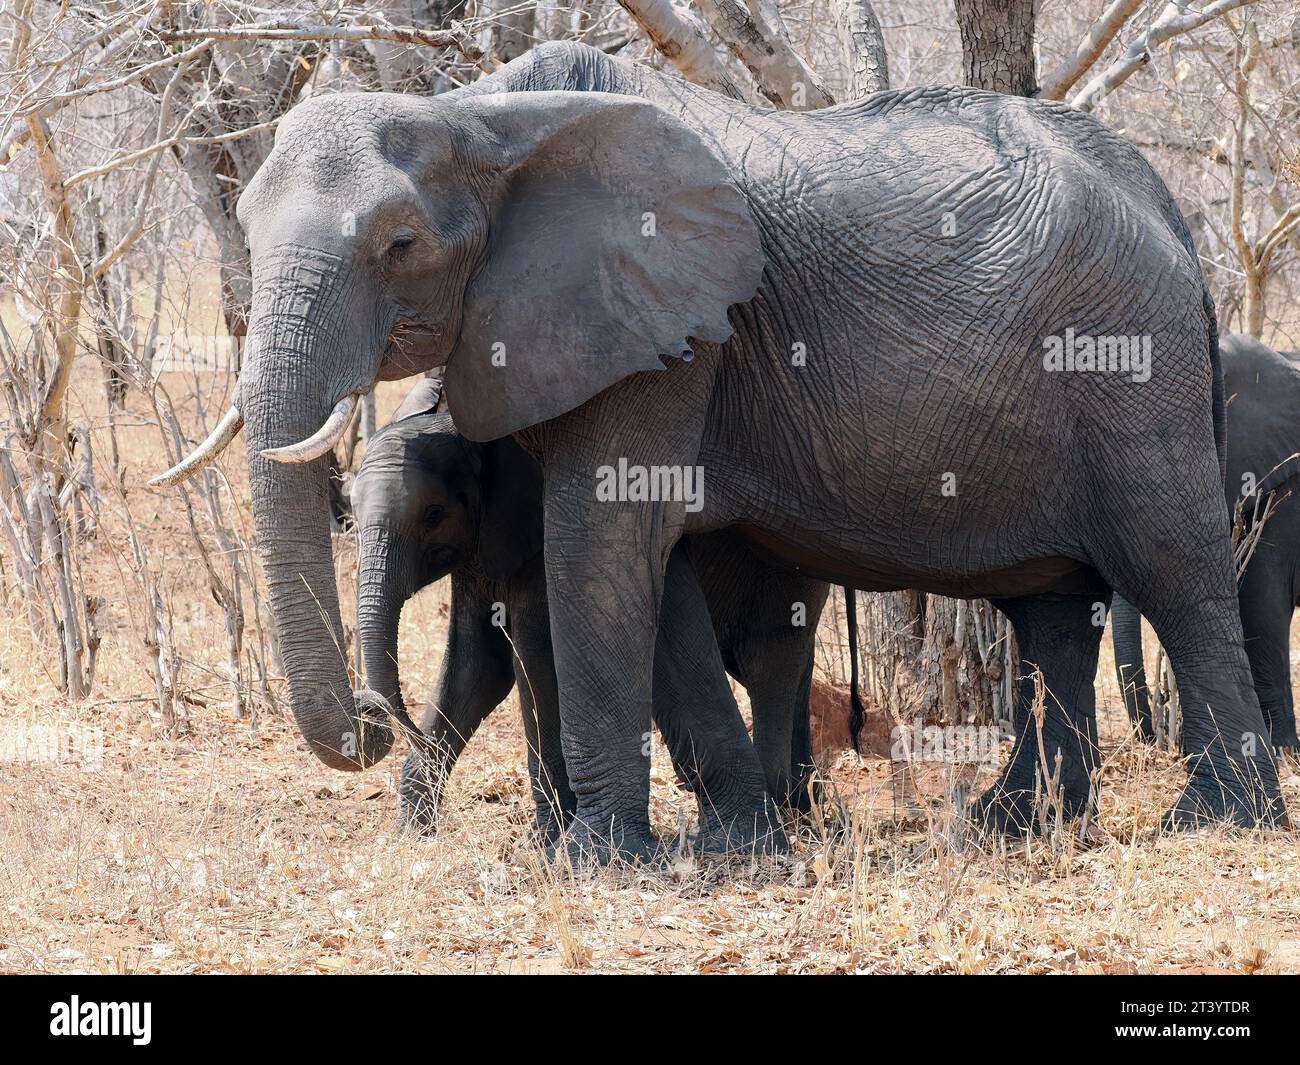 Loxodonta africana (éléphant de savane)